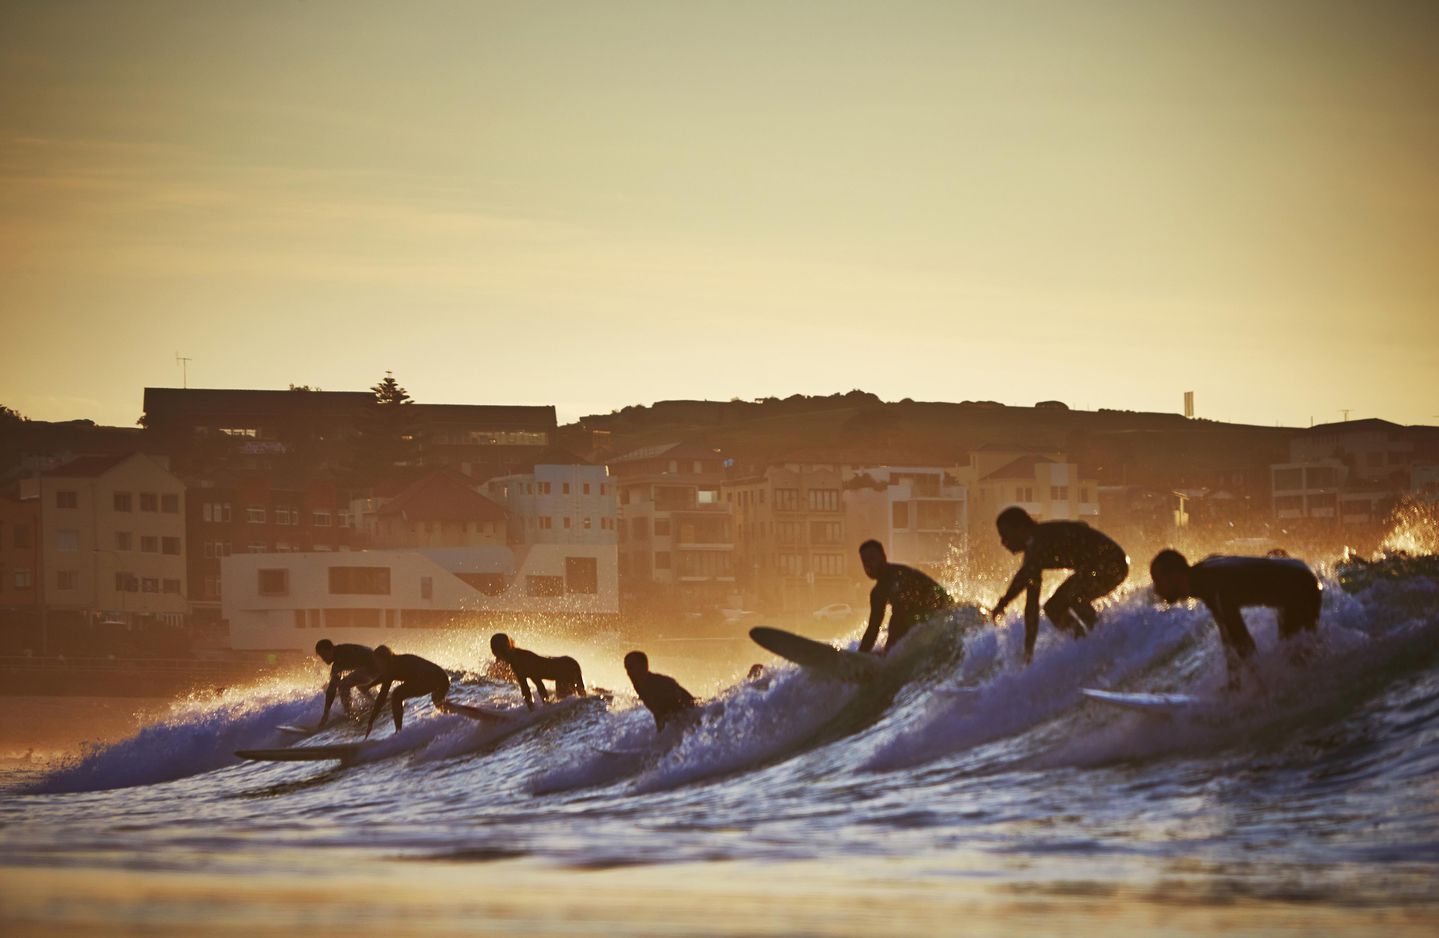 North Bondi Surf Life Saving Club